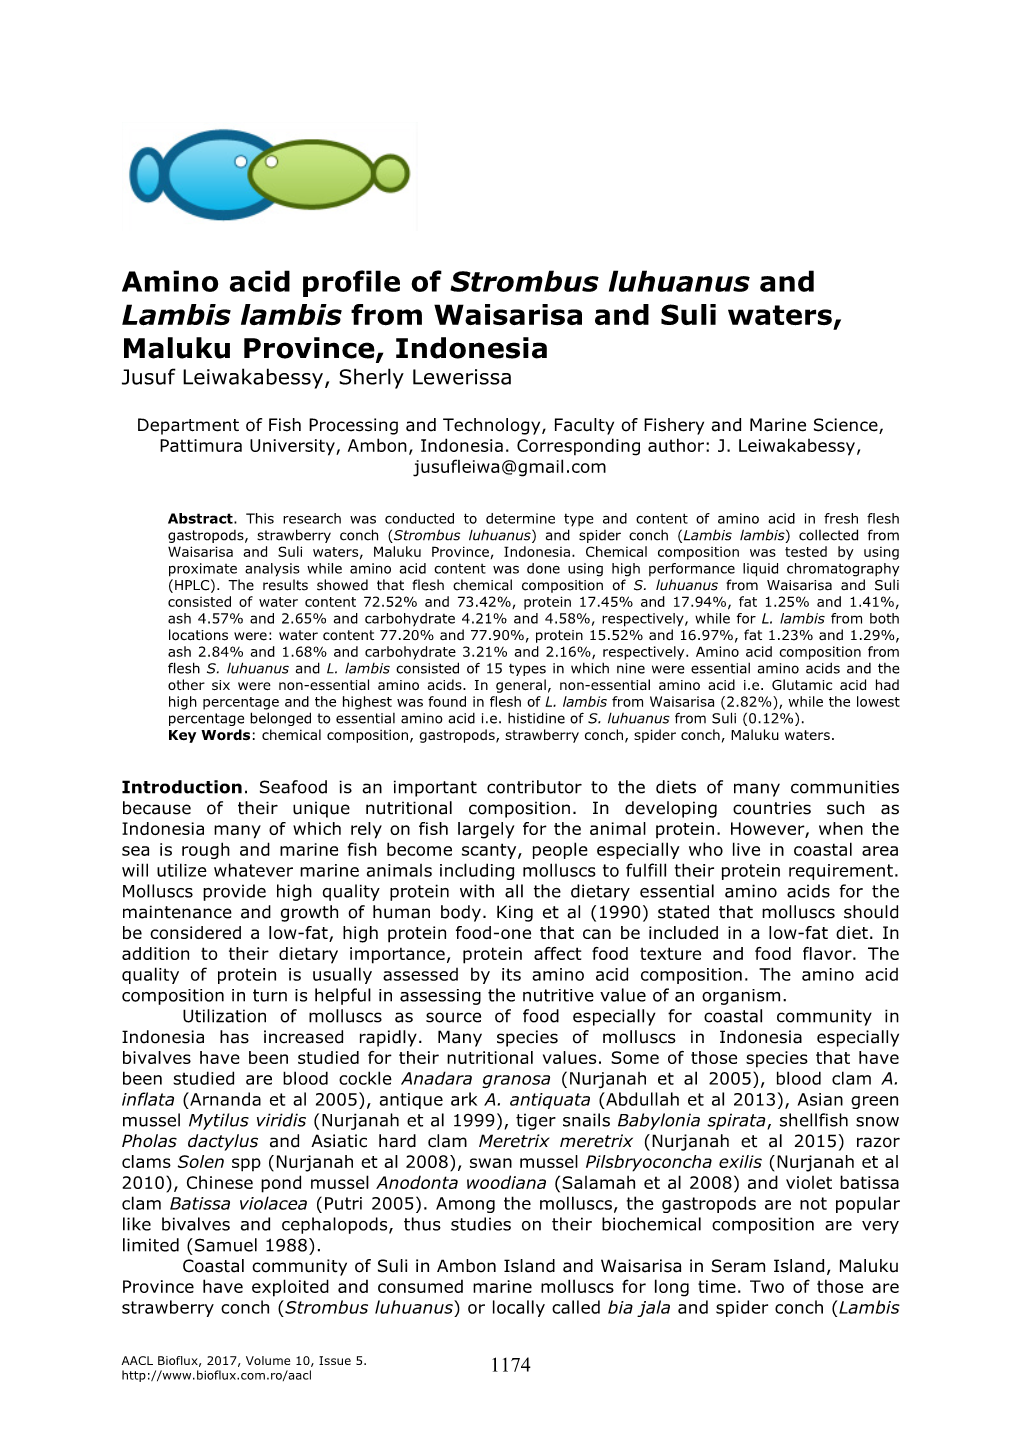 Amino Acid Profile of Strombus Luhuanus and Lambis Lambis from Waisarisa and Suli Waters, Maluku Province, Indonesia Jusuf Leiwakabessy, Sherly Lewerissa